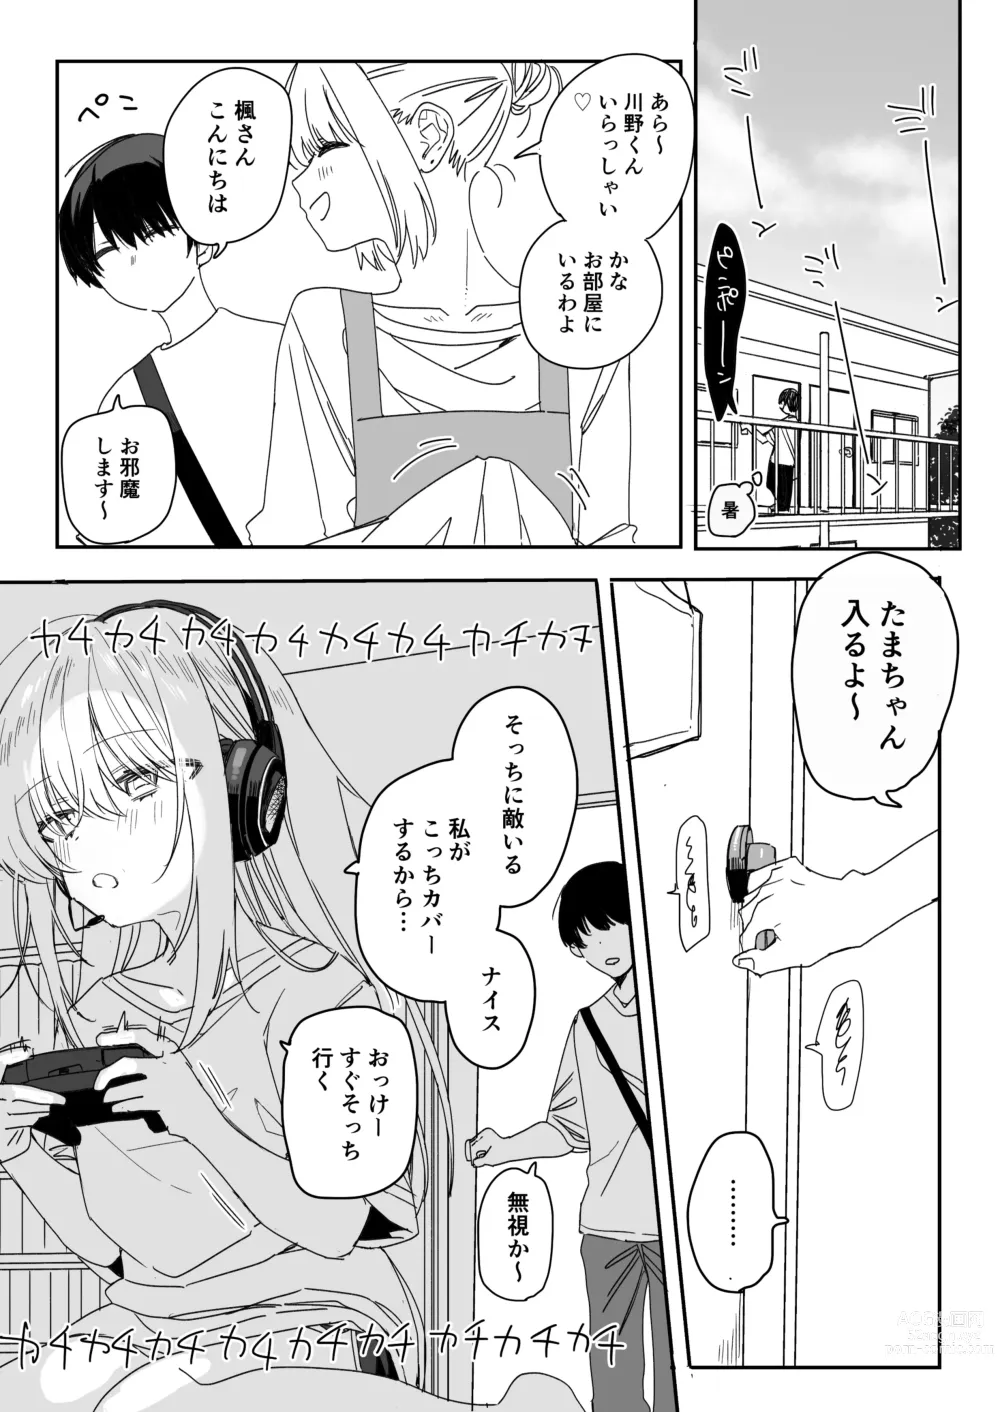 Page 3 of doujinshi 今年の夏休みはゲーマー幼馴染の家に入り浸ってエッチするので忙しいです